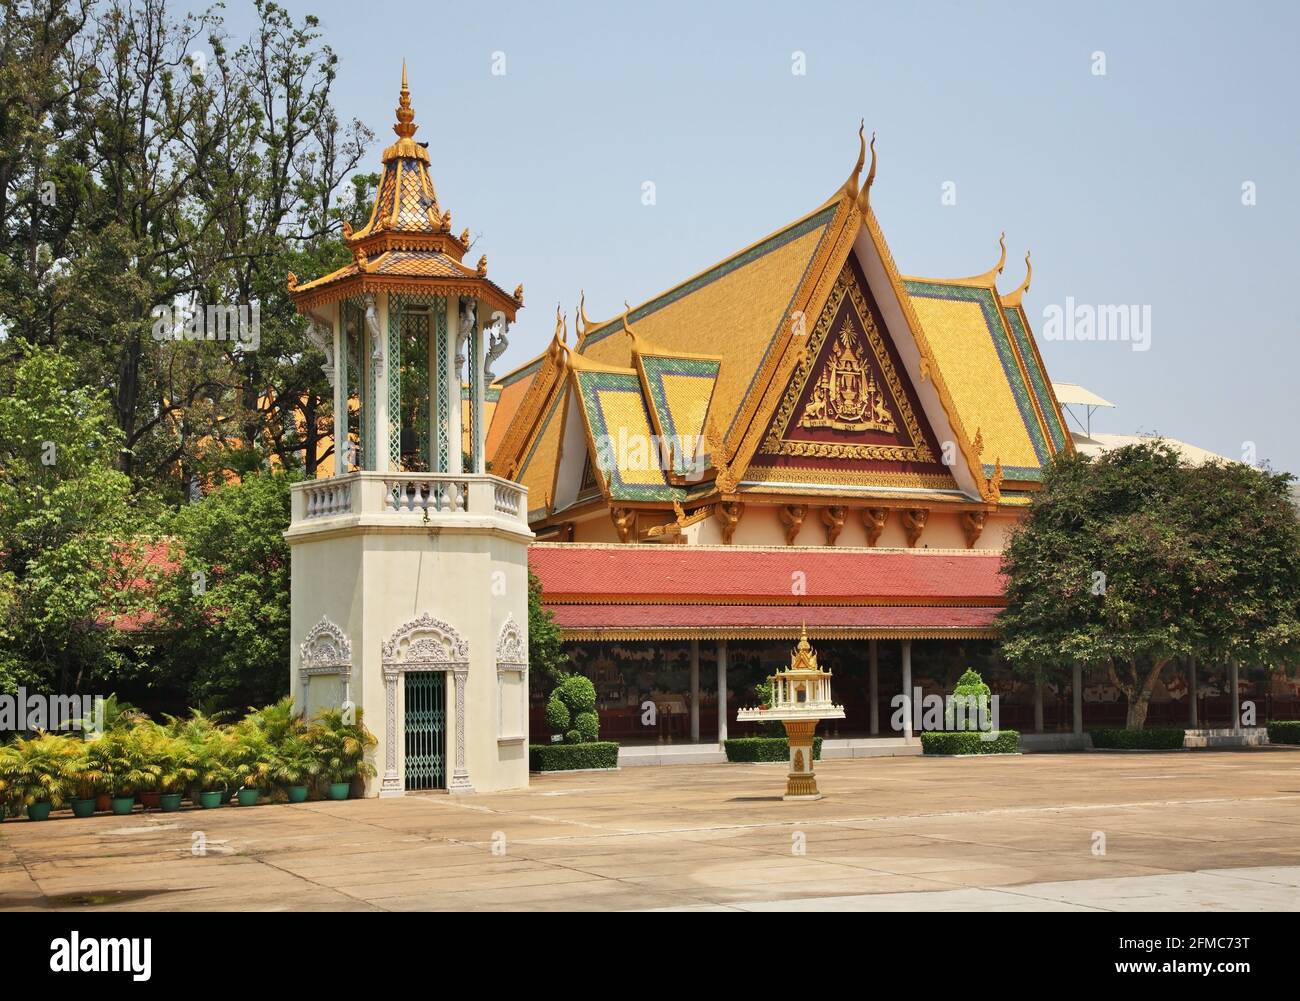 Royal Palace (Preah Barum Reachea Veang Nei Preah Reacheanachak Kampuchea) in Phnom Penh. Cambodia Stock Photo